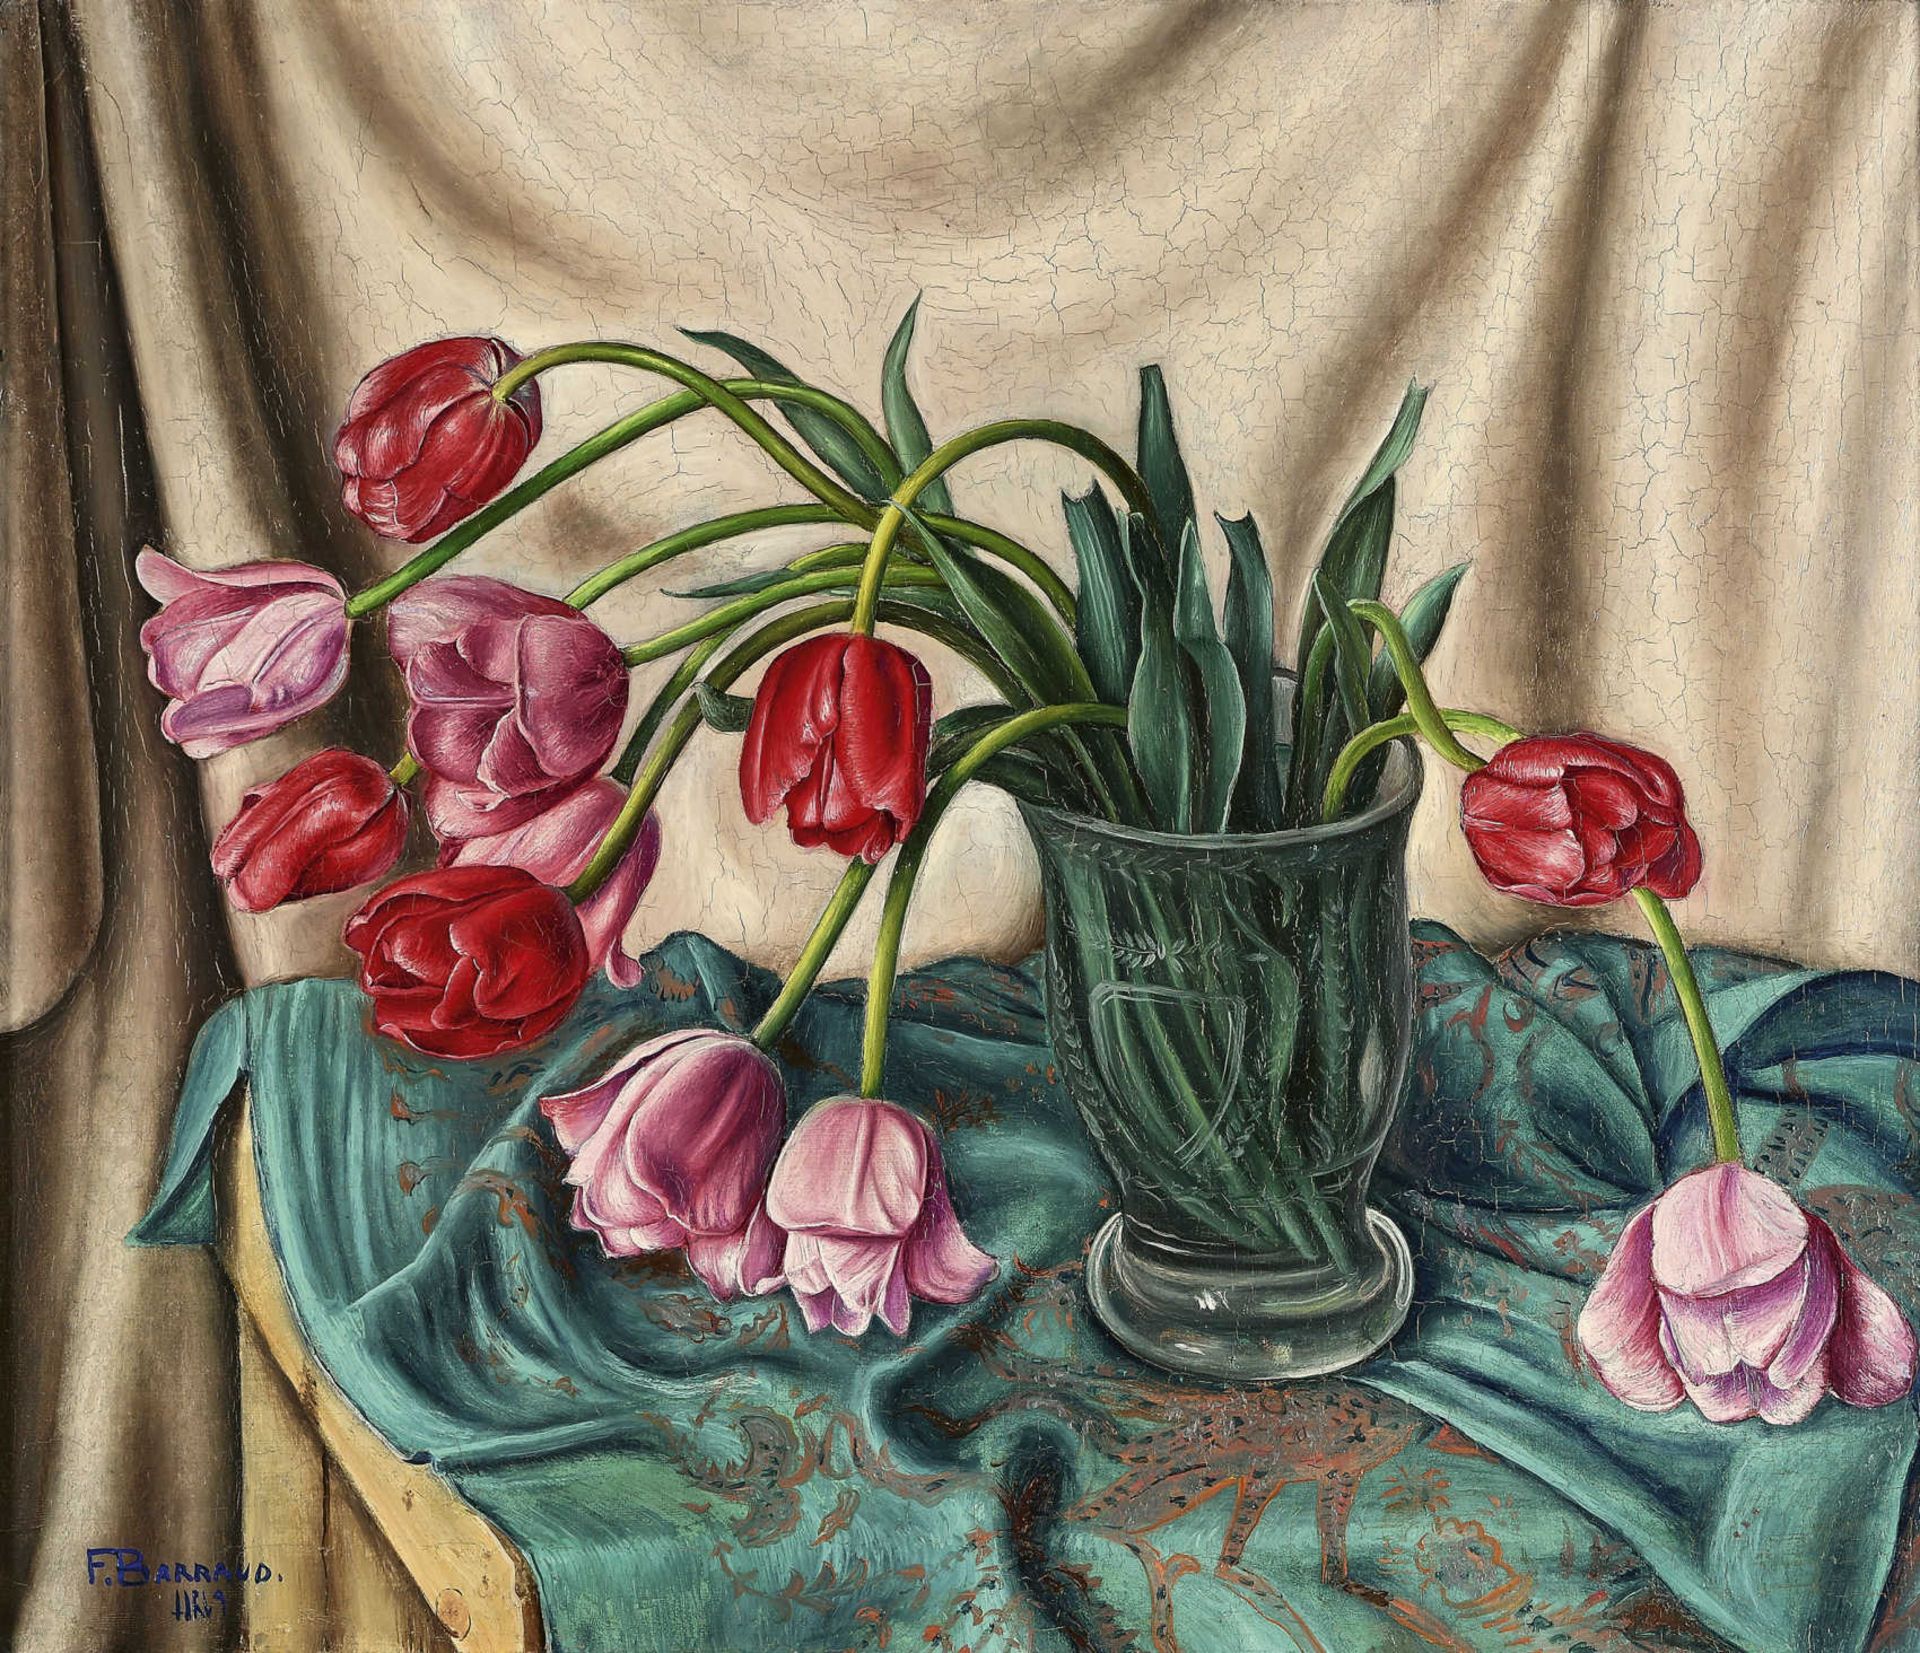 BARRAUD, FRANÇOIS ÉMILELa Chaux-de-Fonds 1899 - 1934 GenèveStillleben mit Tulpen in Becherglas.Öl